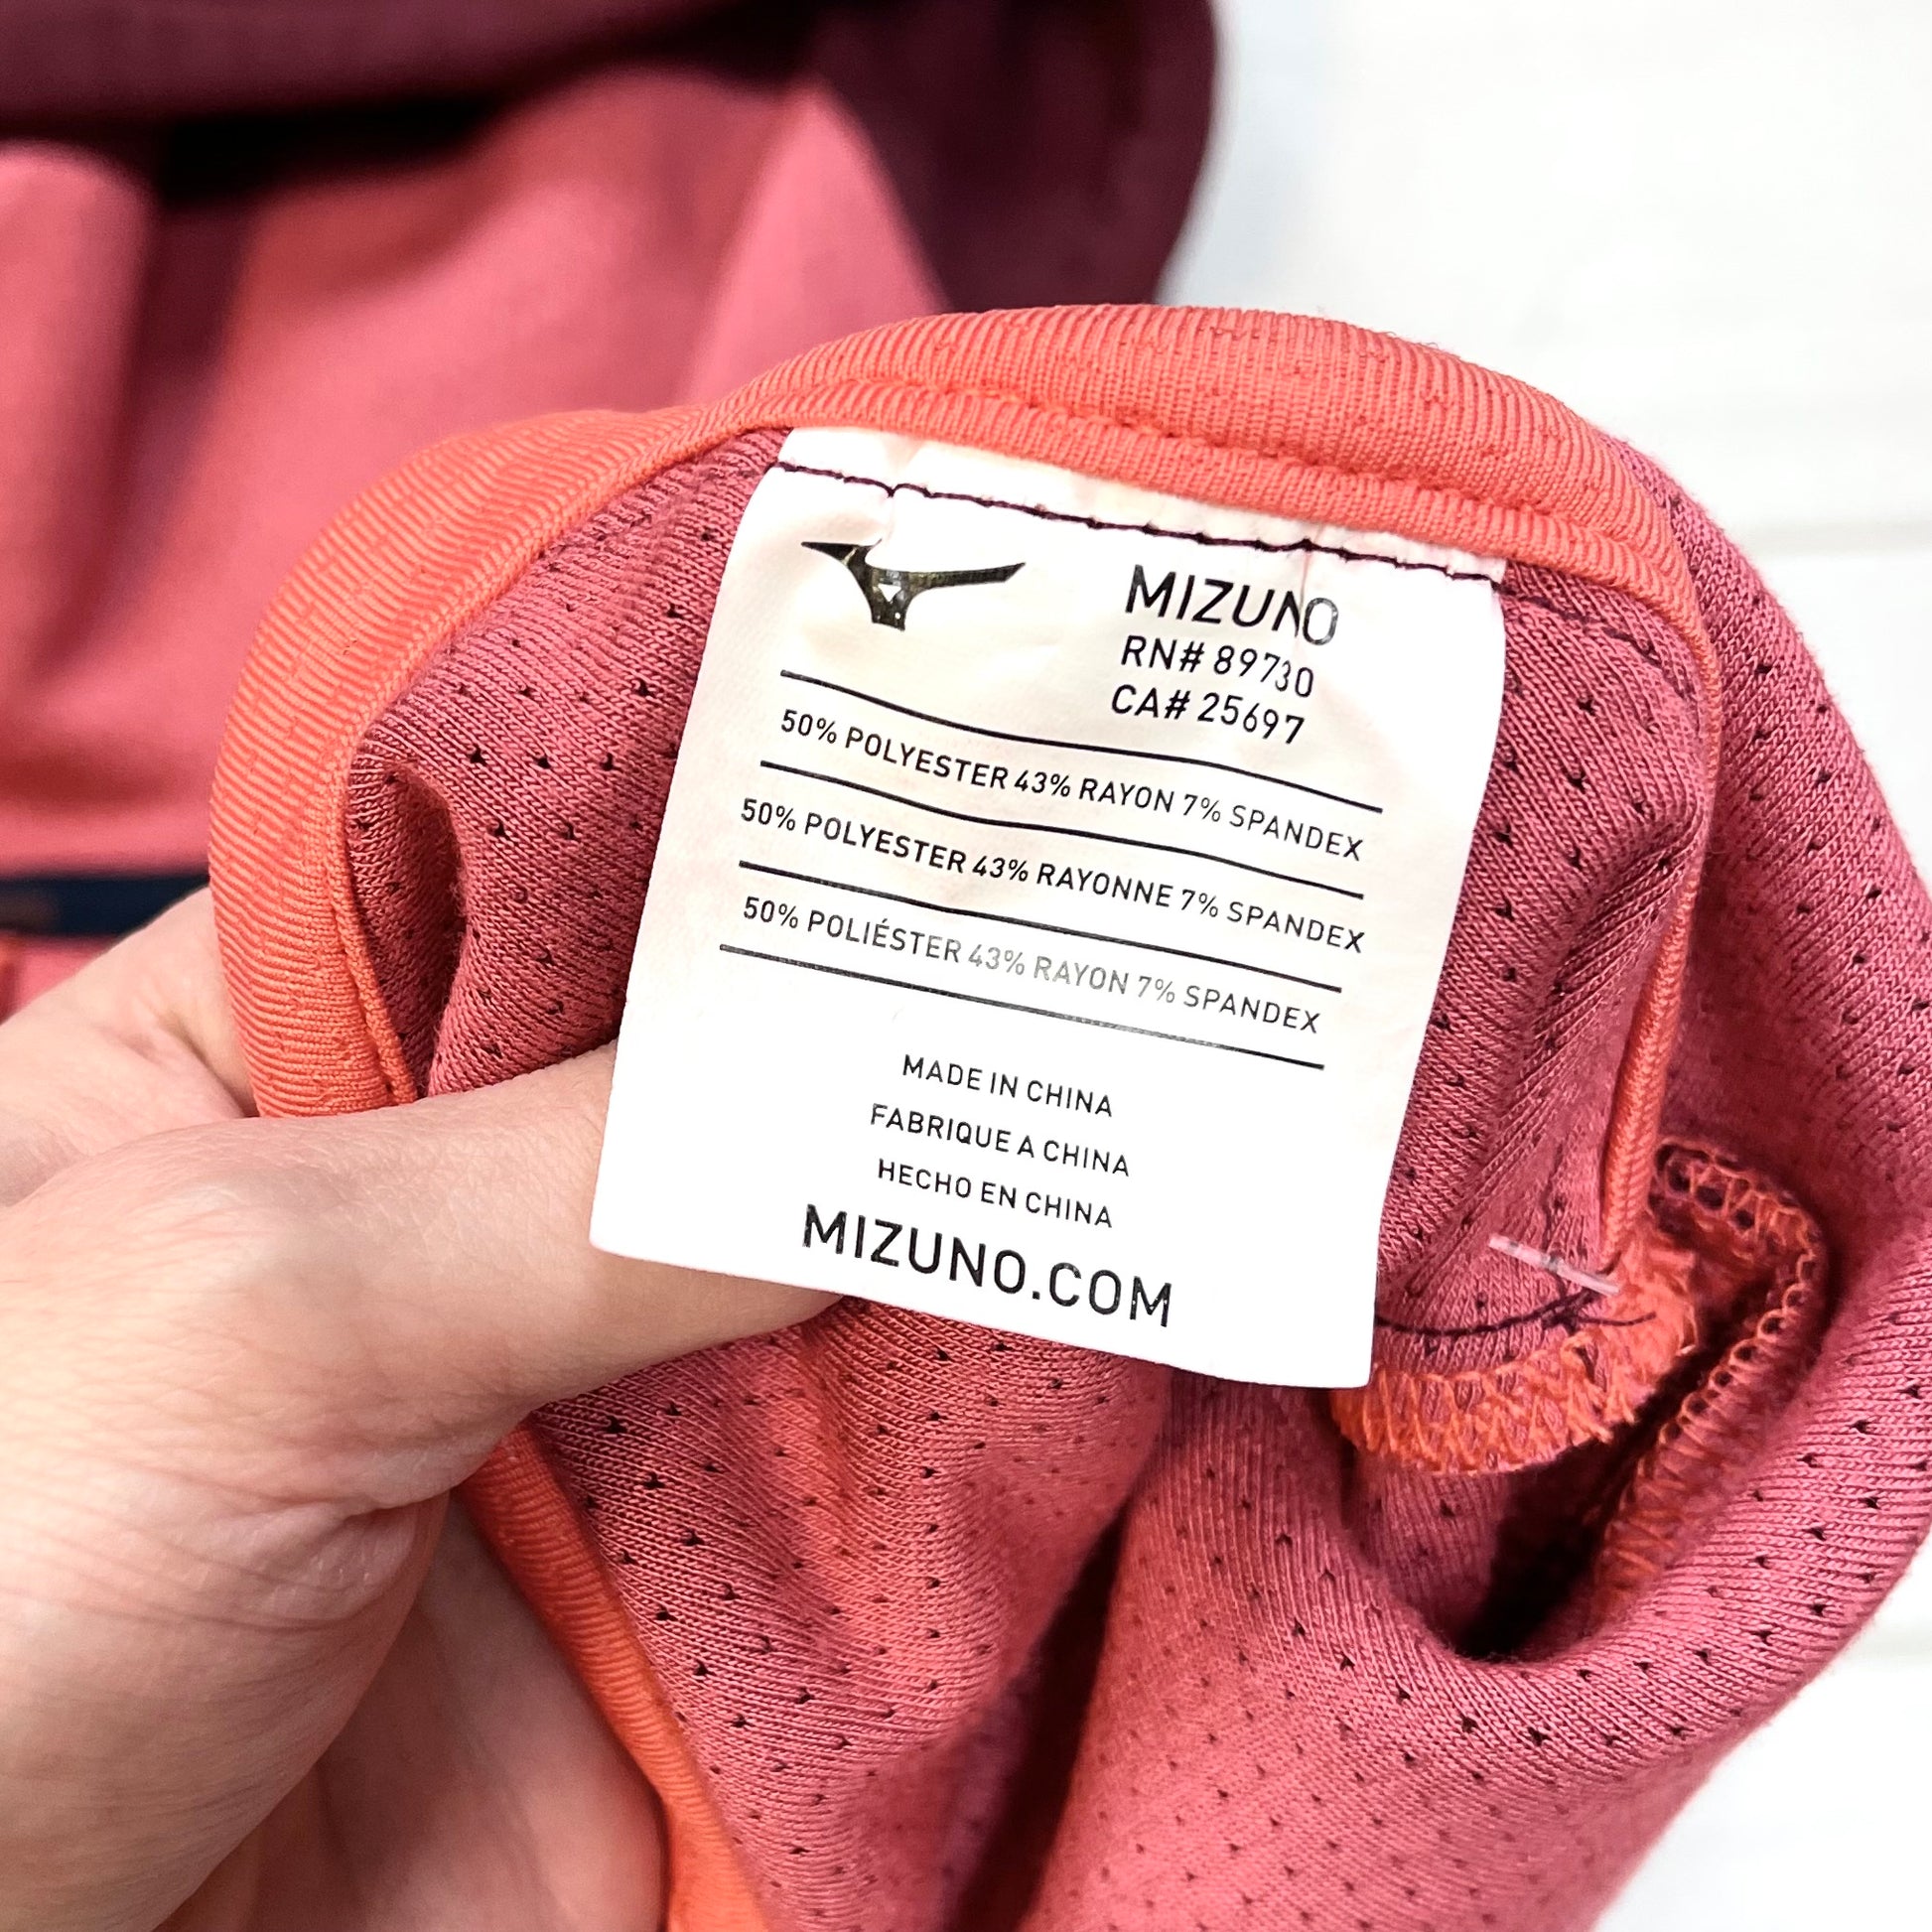 Mizuno spandex  Clothes design, Spandex, Mizuno